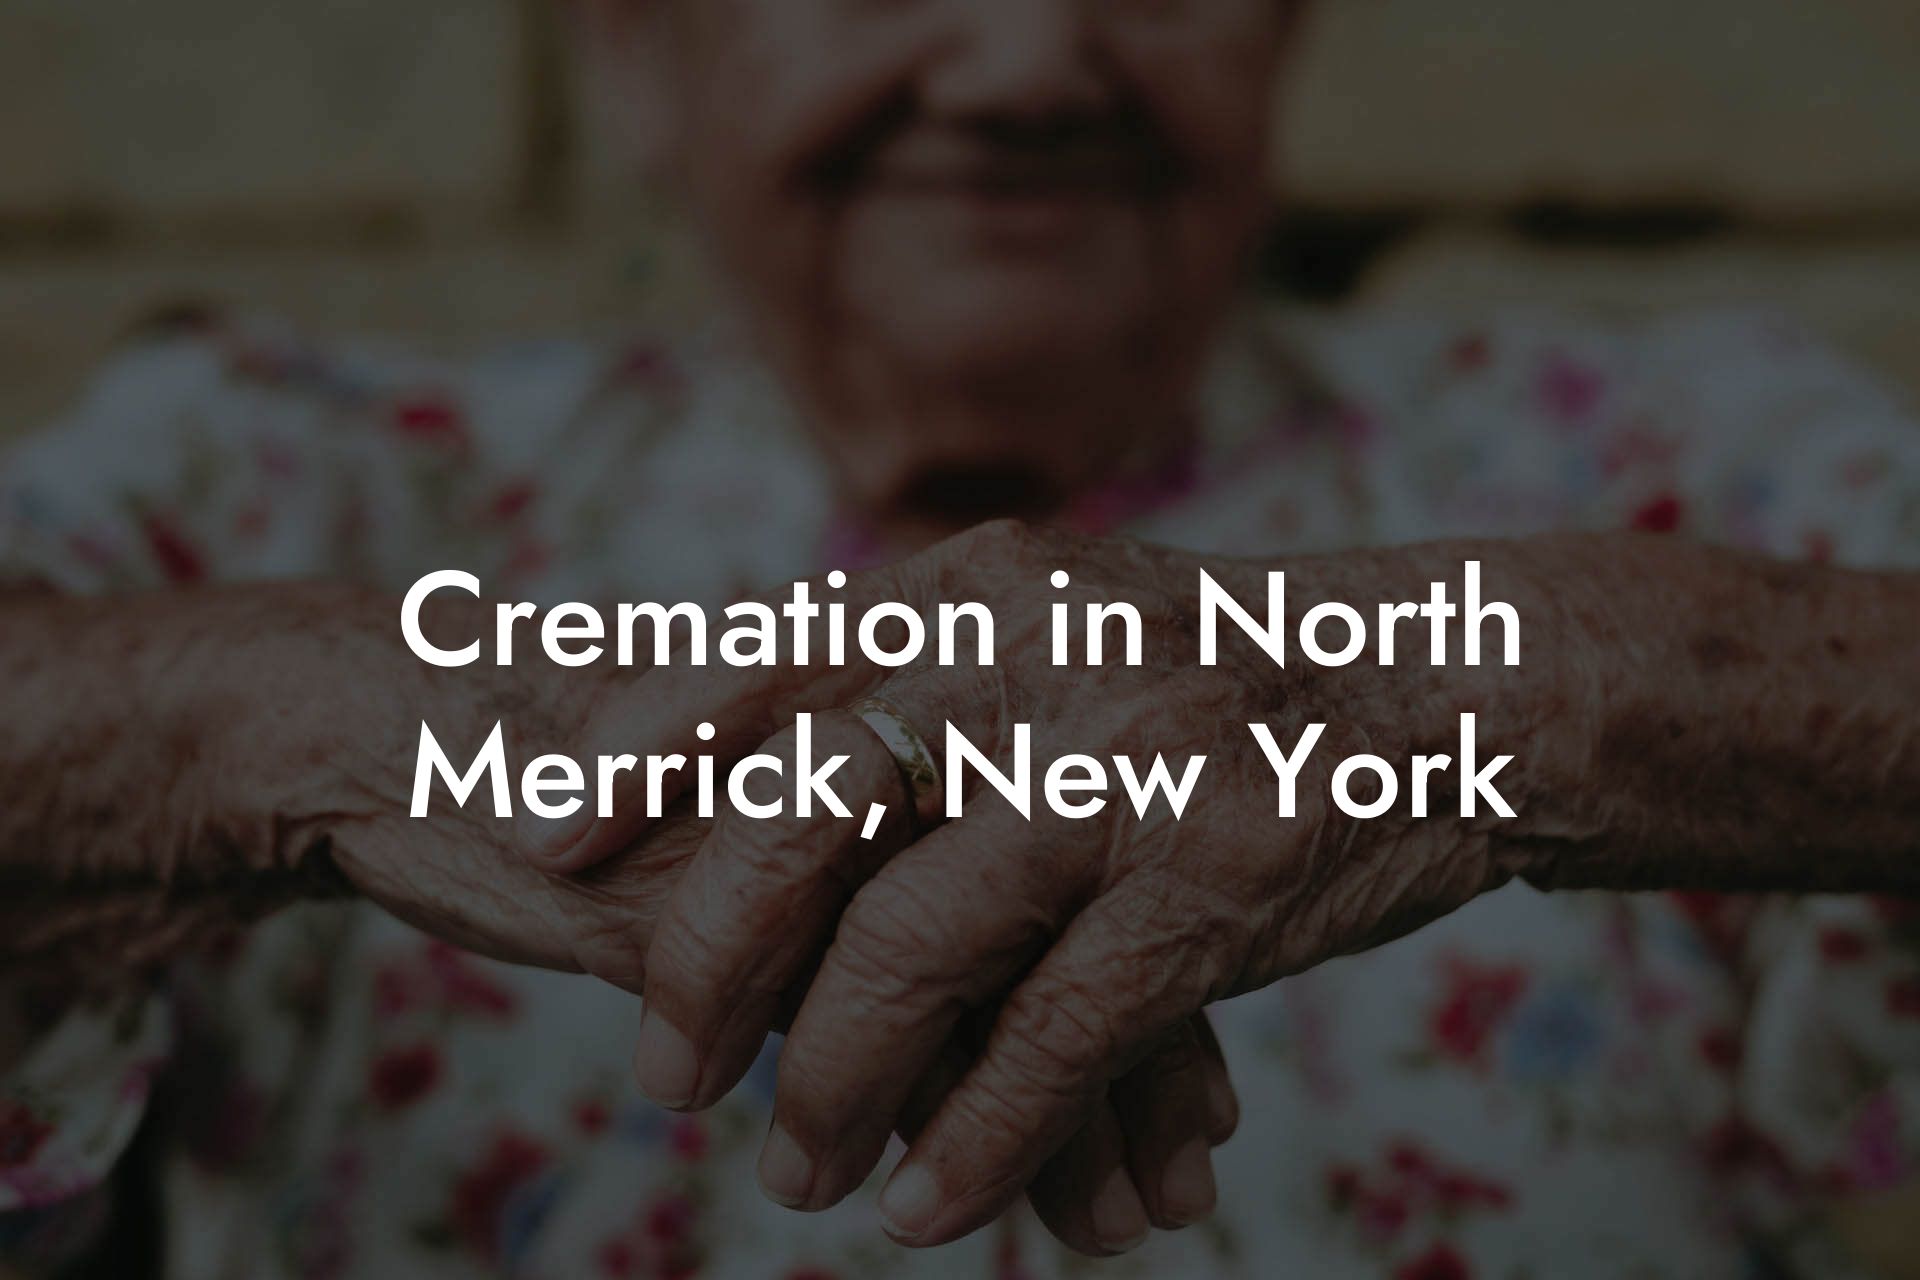 Cremation in North Merrick, New York